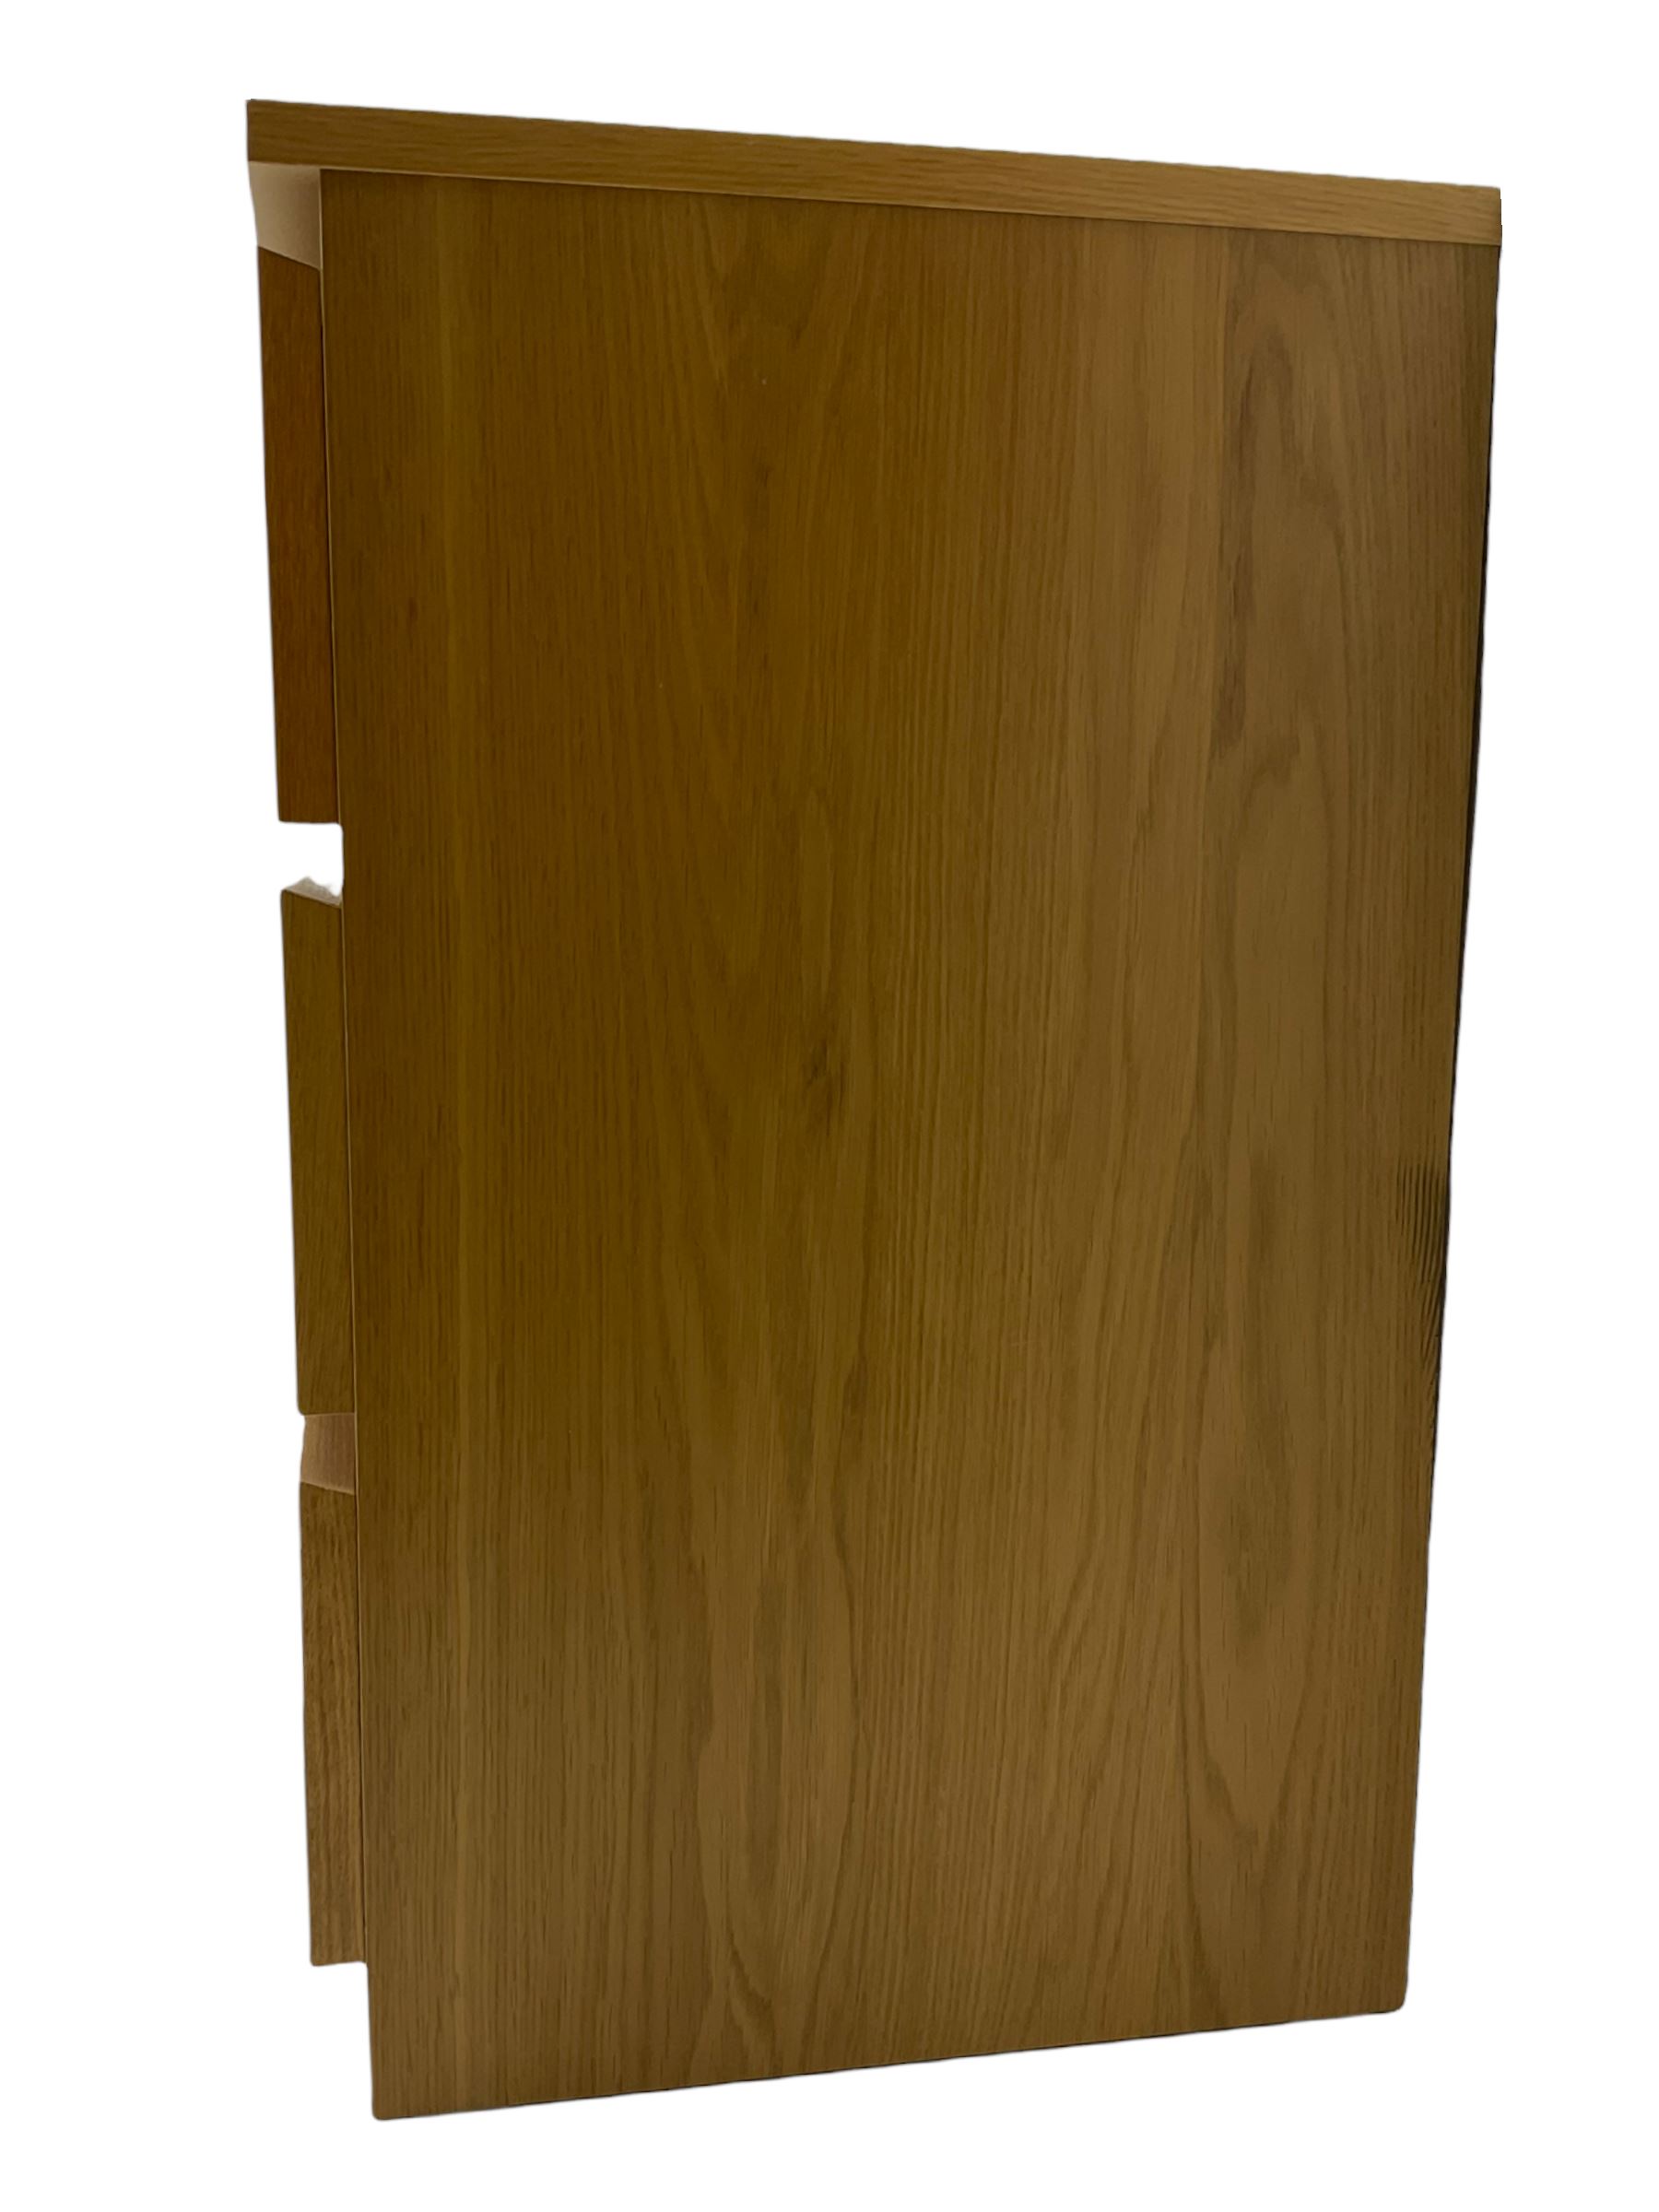 Ikea light oak three drawer chest - Image 5 of 6